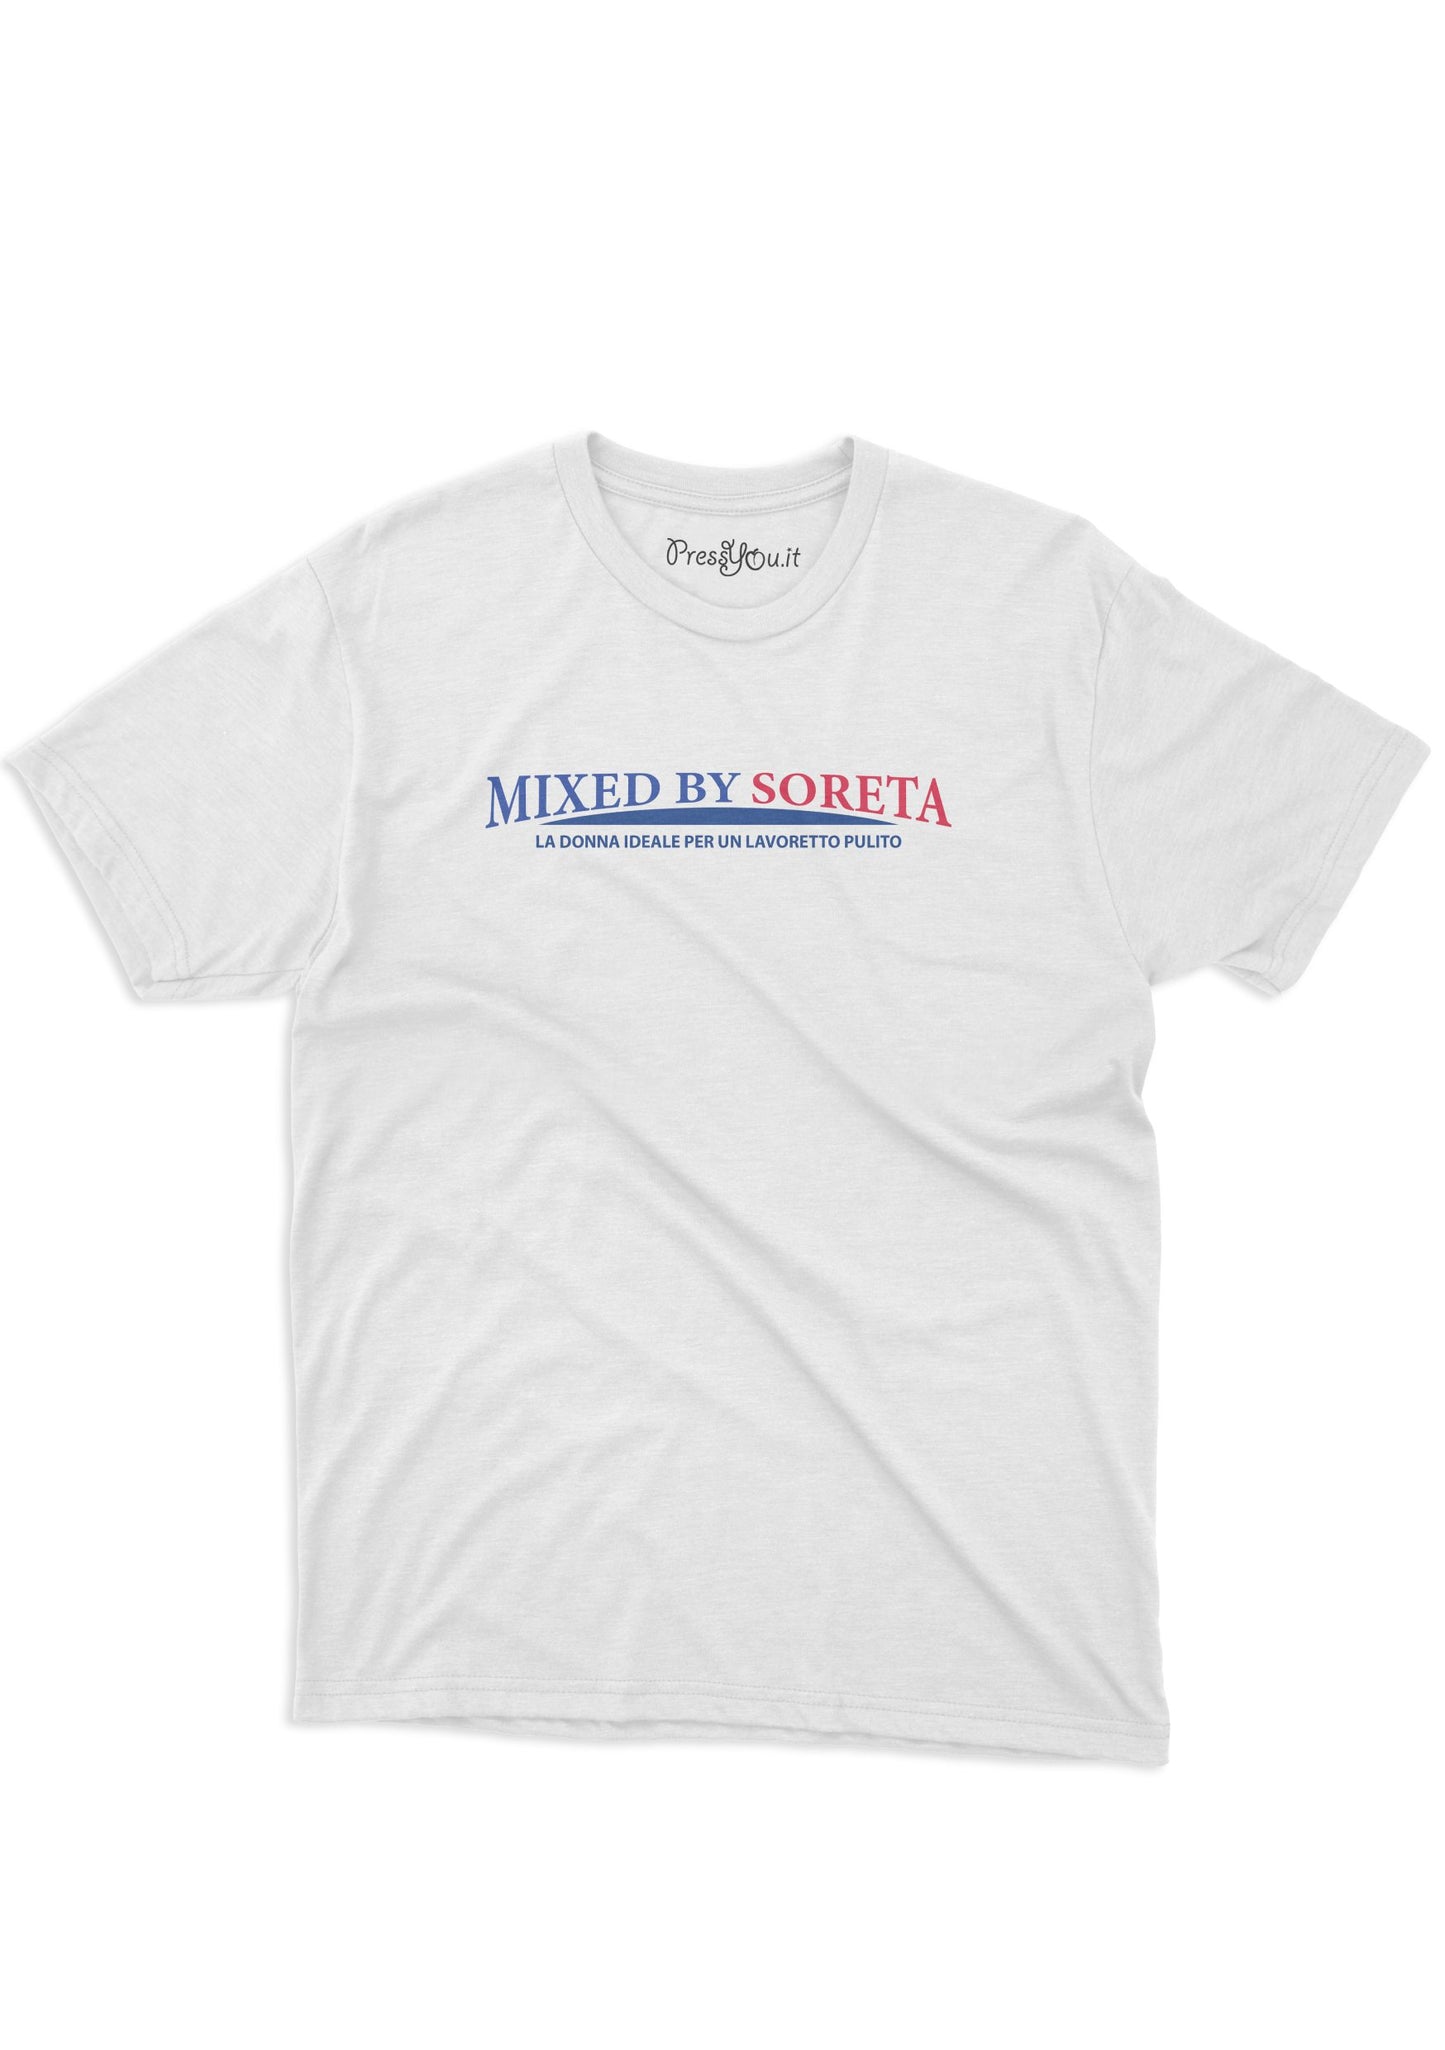 t-shirt-mixed by soreta the ideal woman for a clean job, fun gift idea